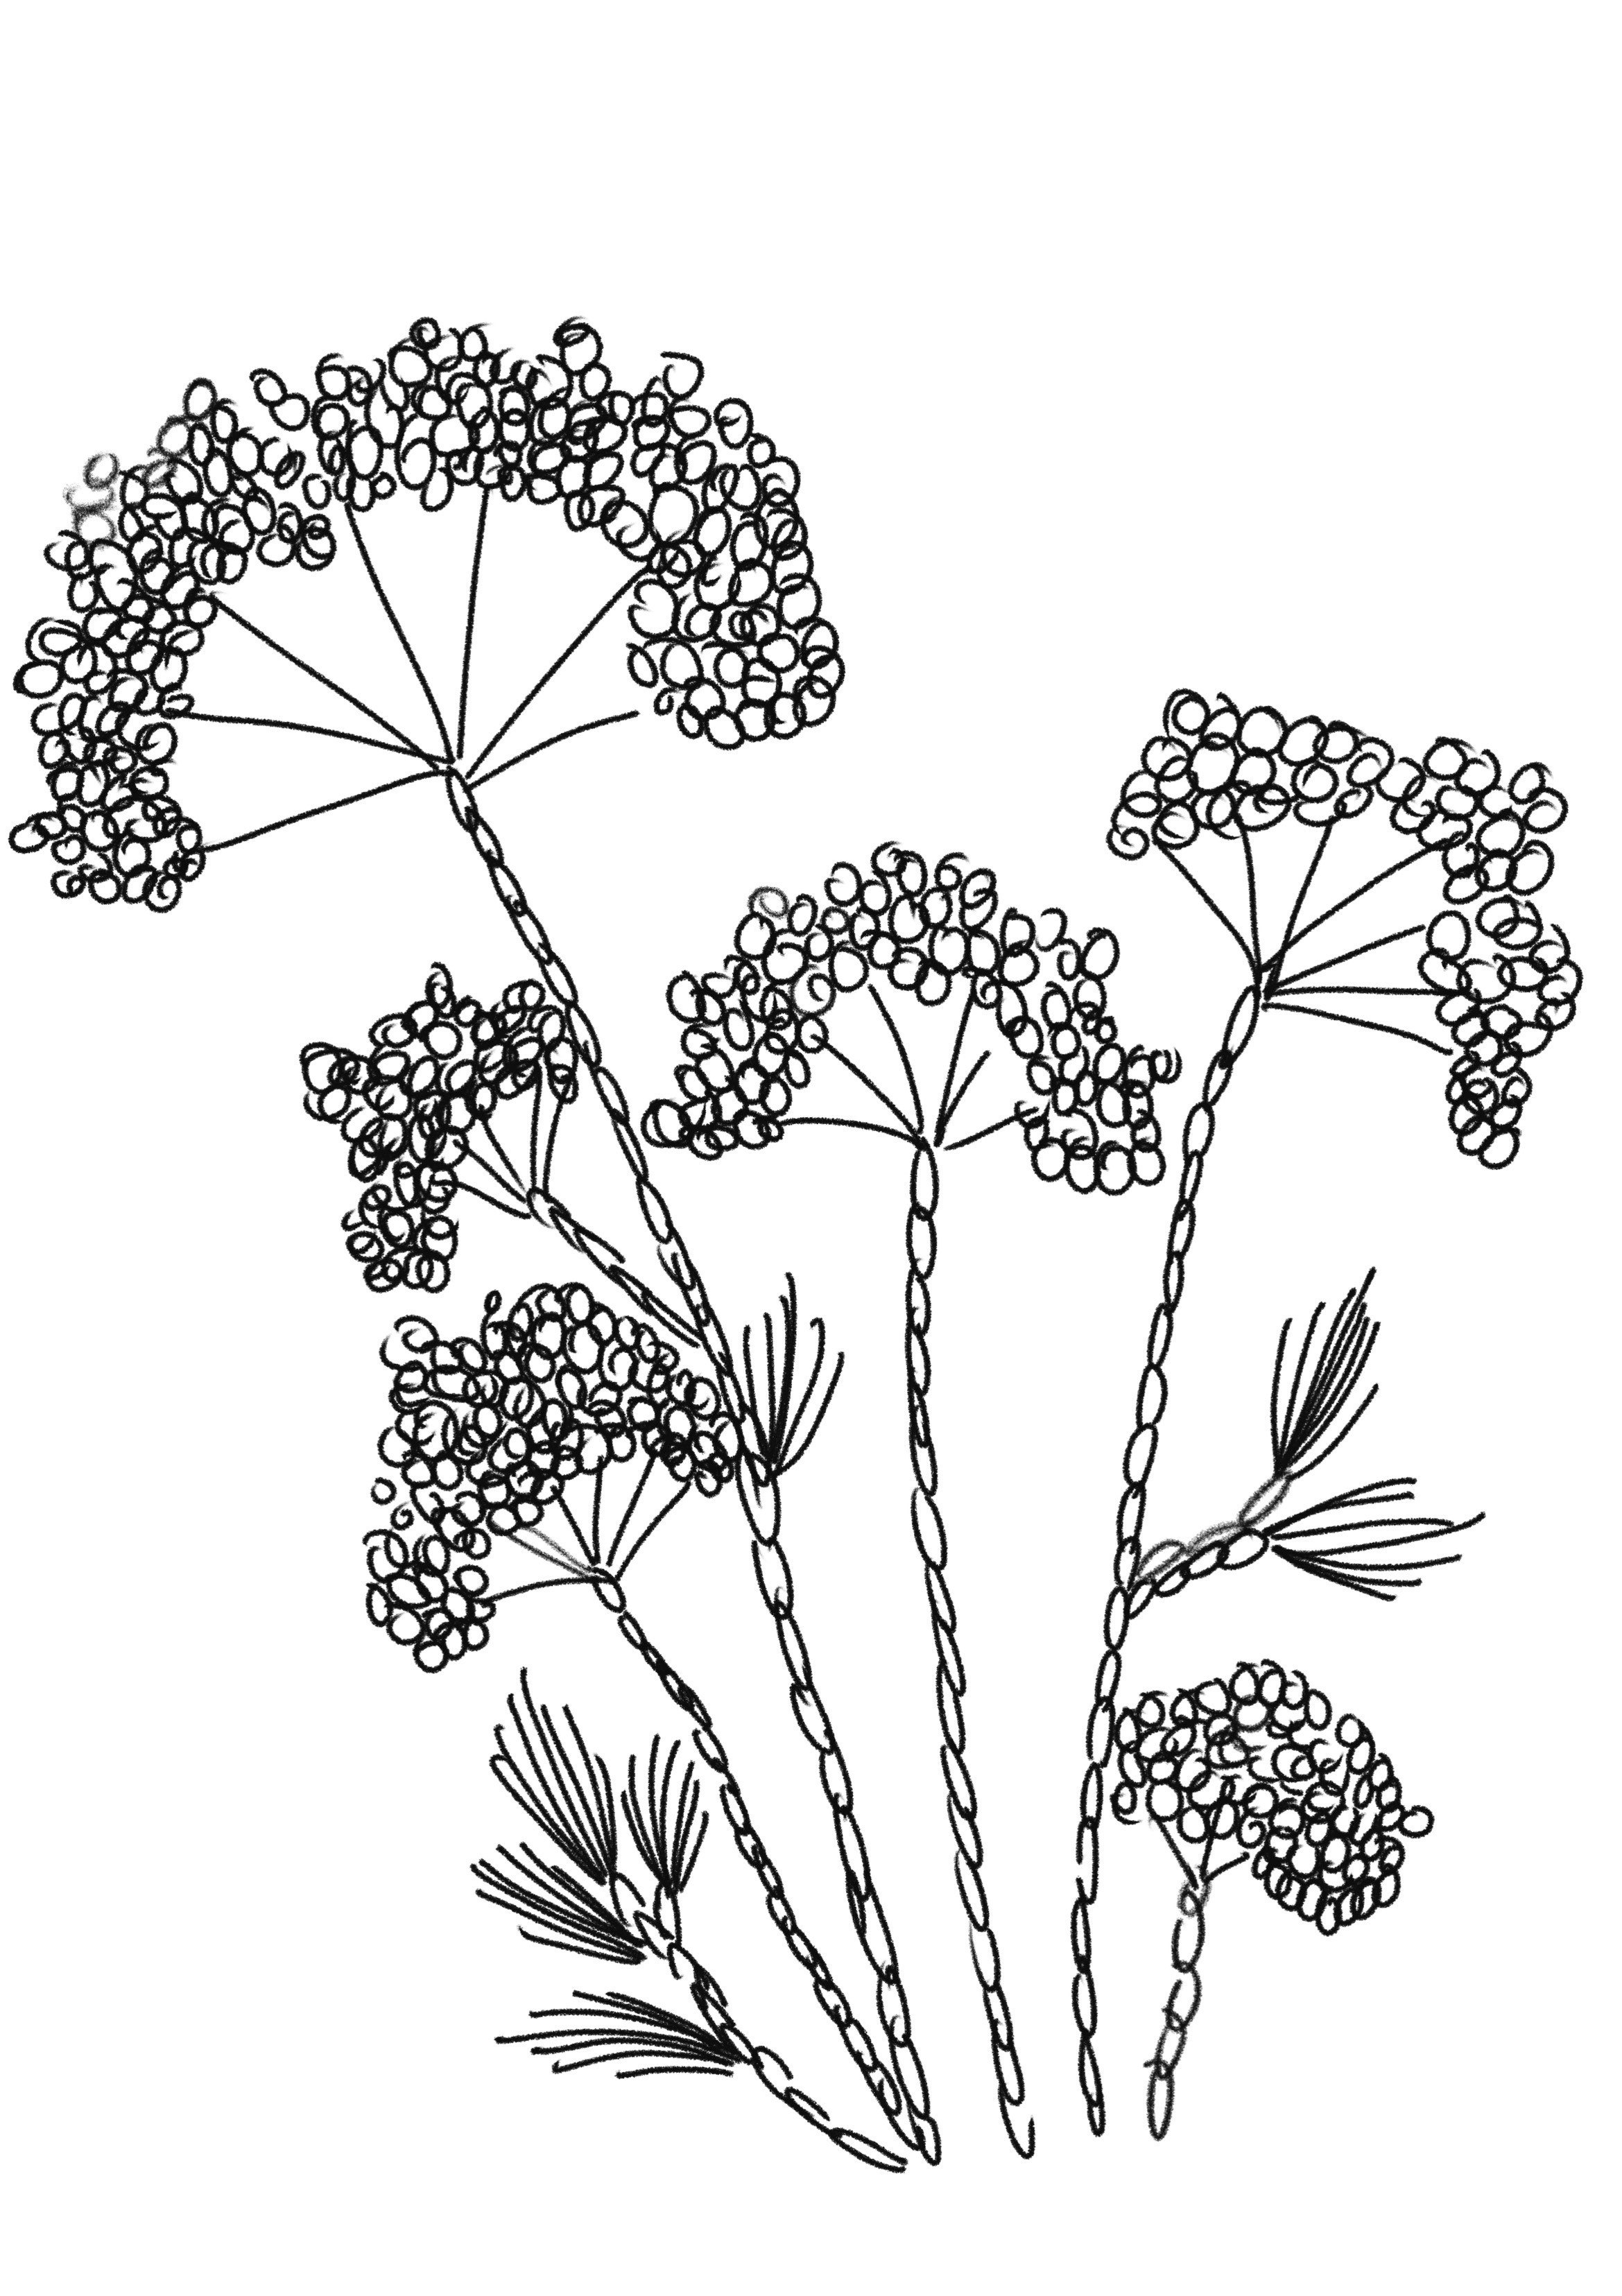 Broderidiagram til tylbroderi med blomster